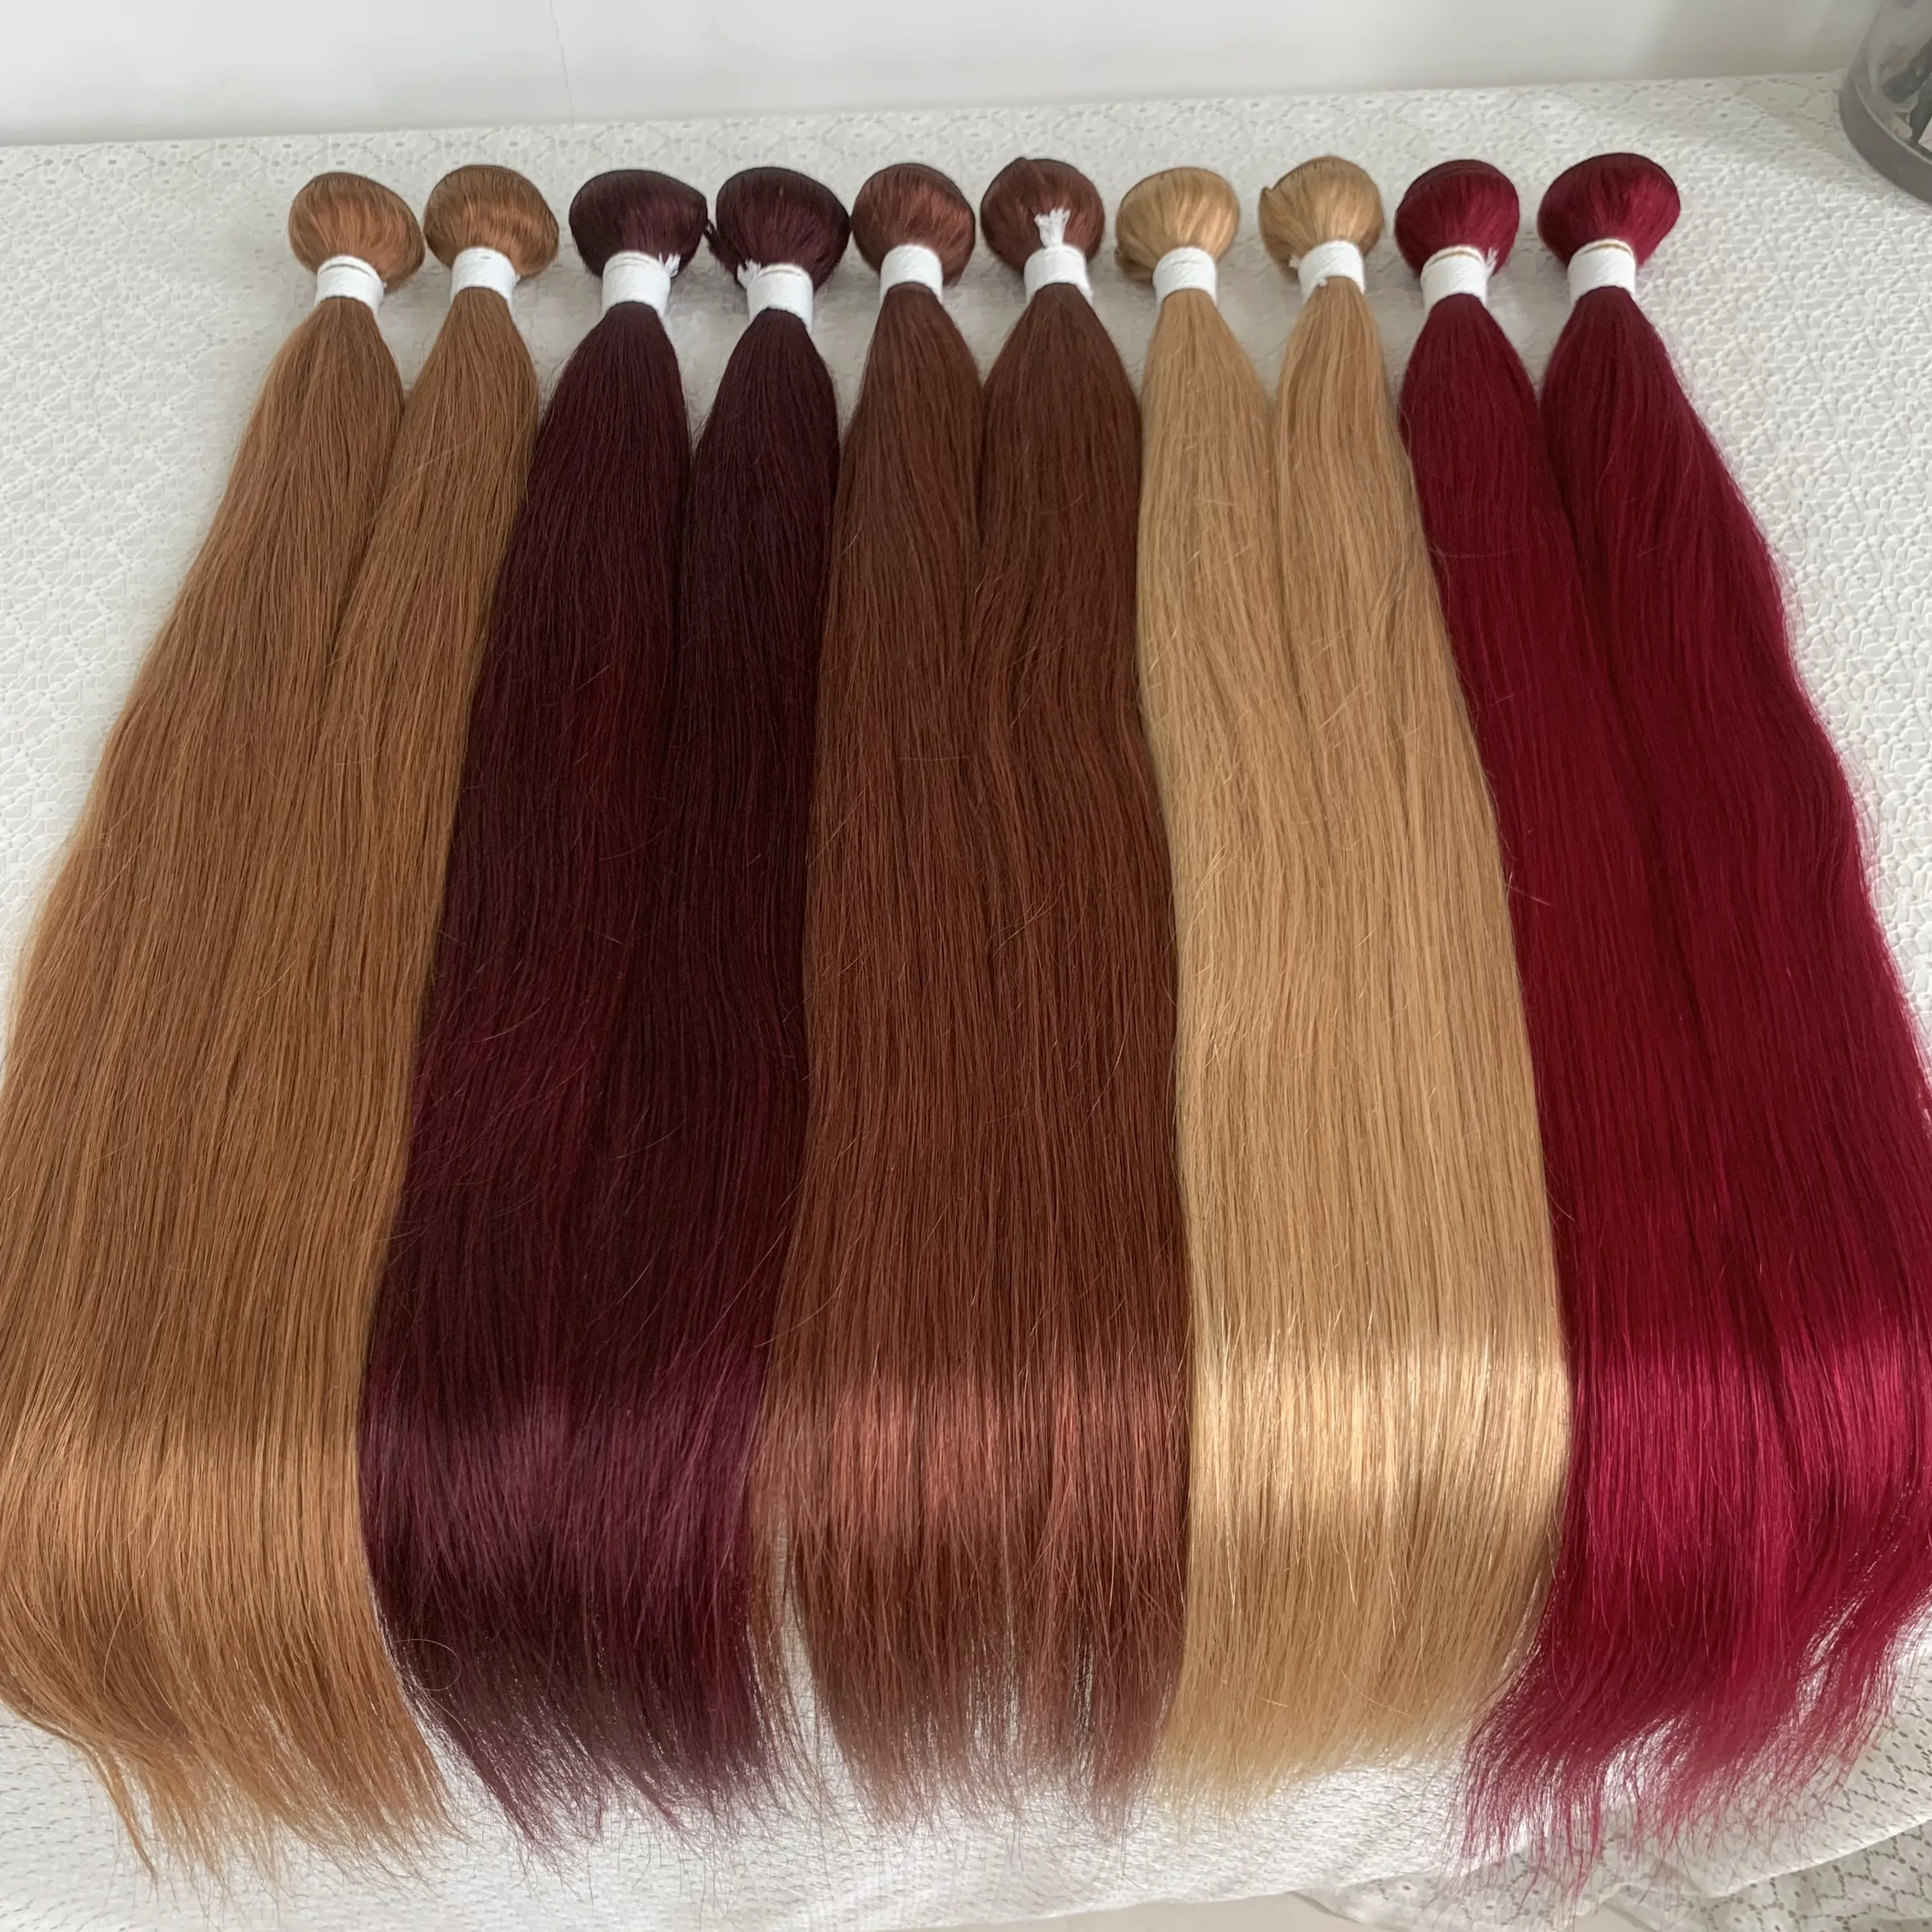 X-TRESS Cheap Price Human Hair Ombre Colors Bundles With Closure Loose Wave Hair Bundles For All Women Human Hair Bundles Weave